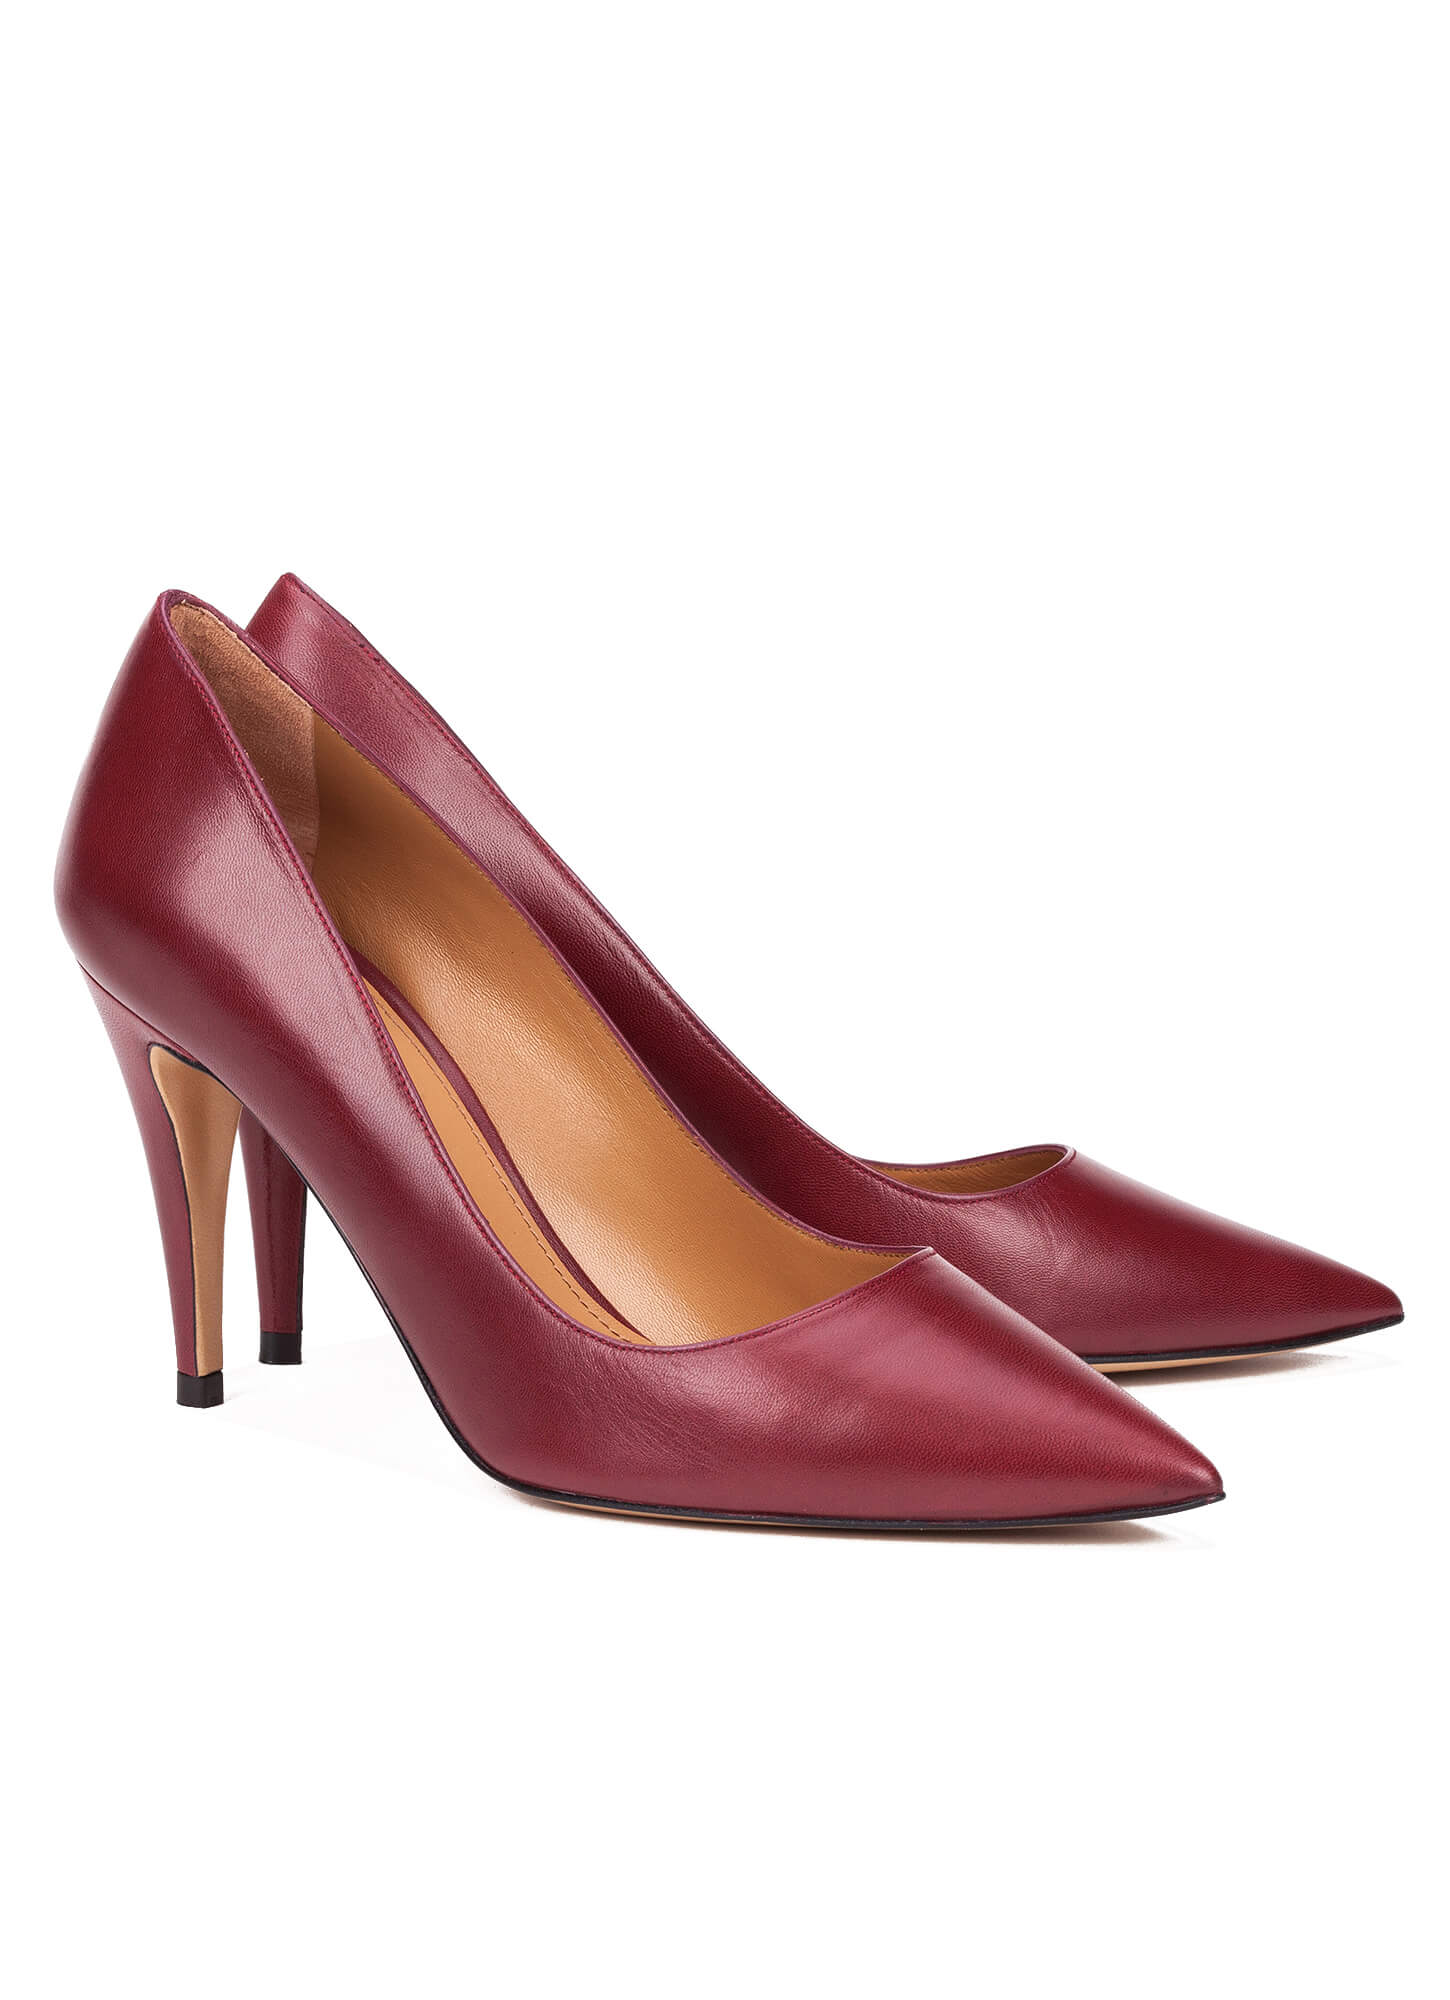 High heel pumps in burgundy leather - online shoe store Pura Lopez ...